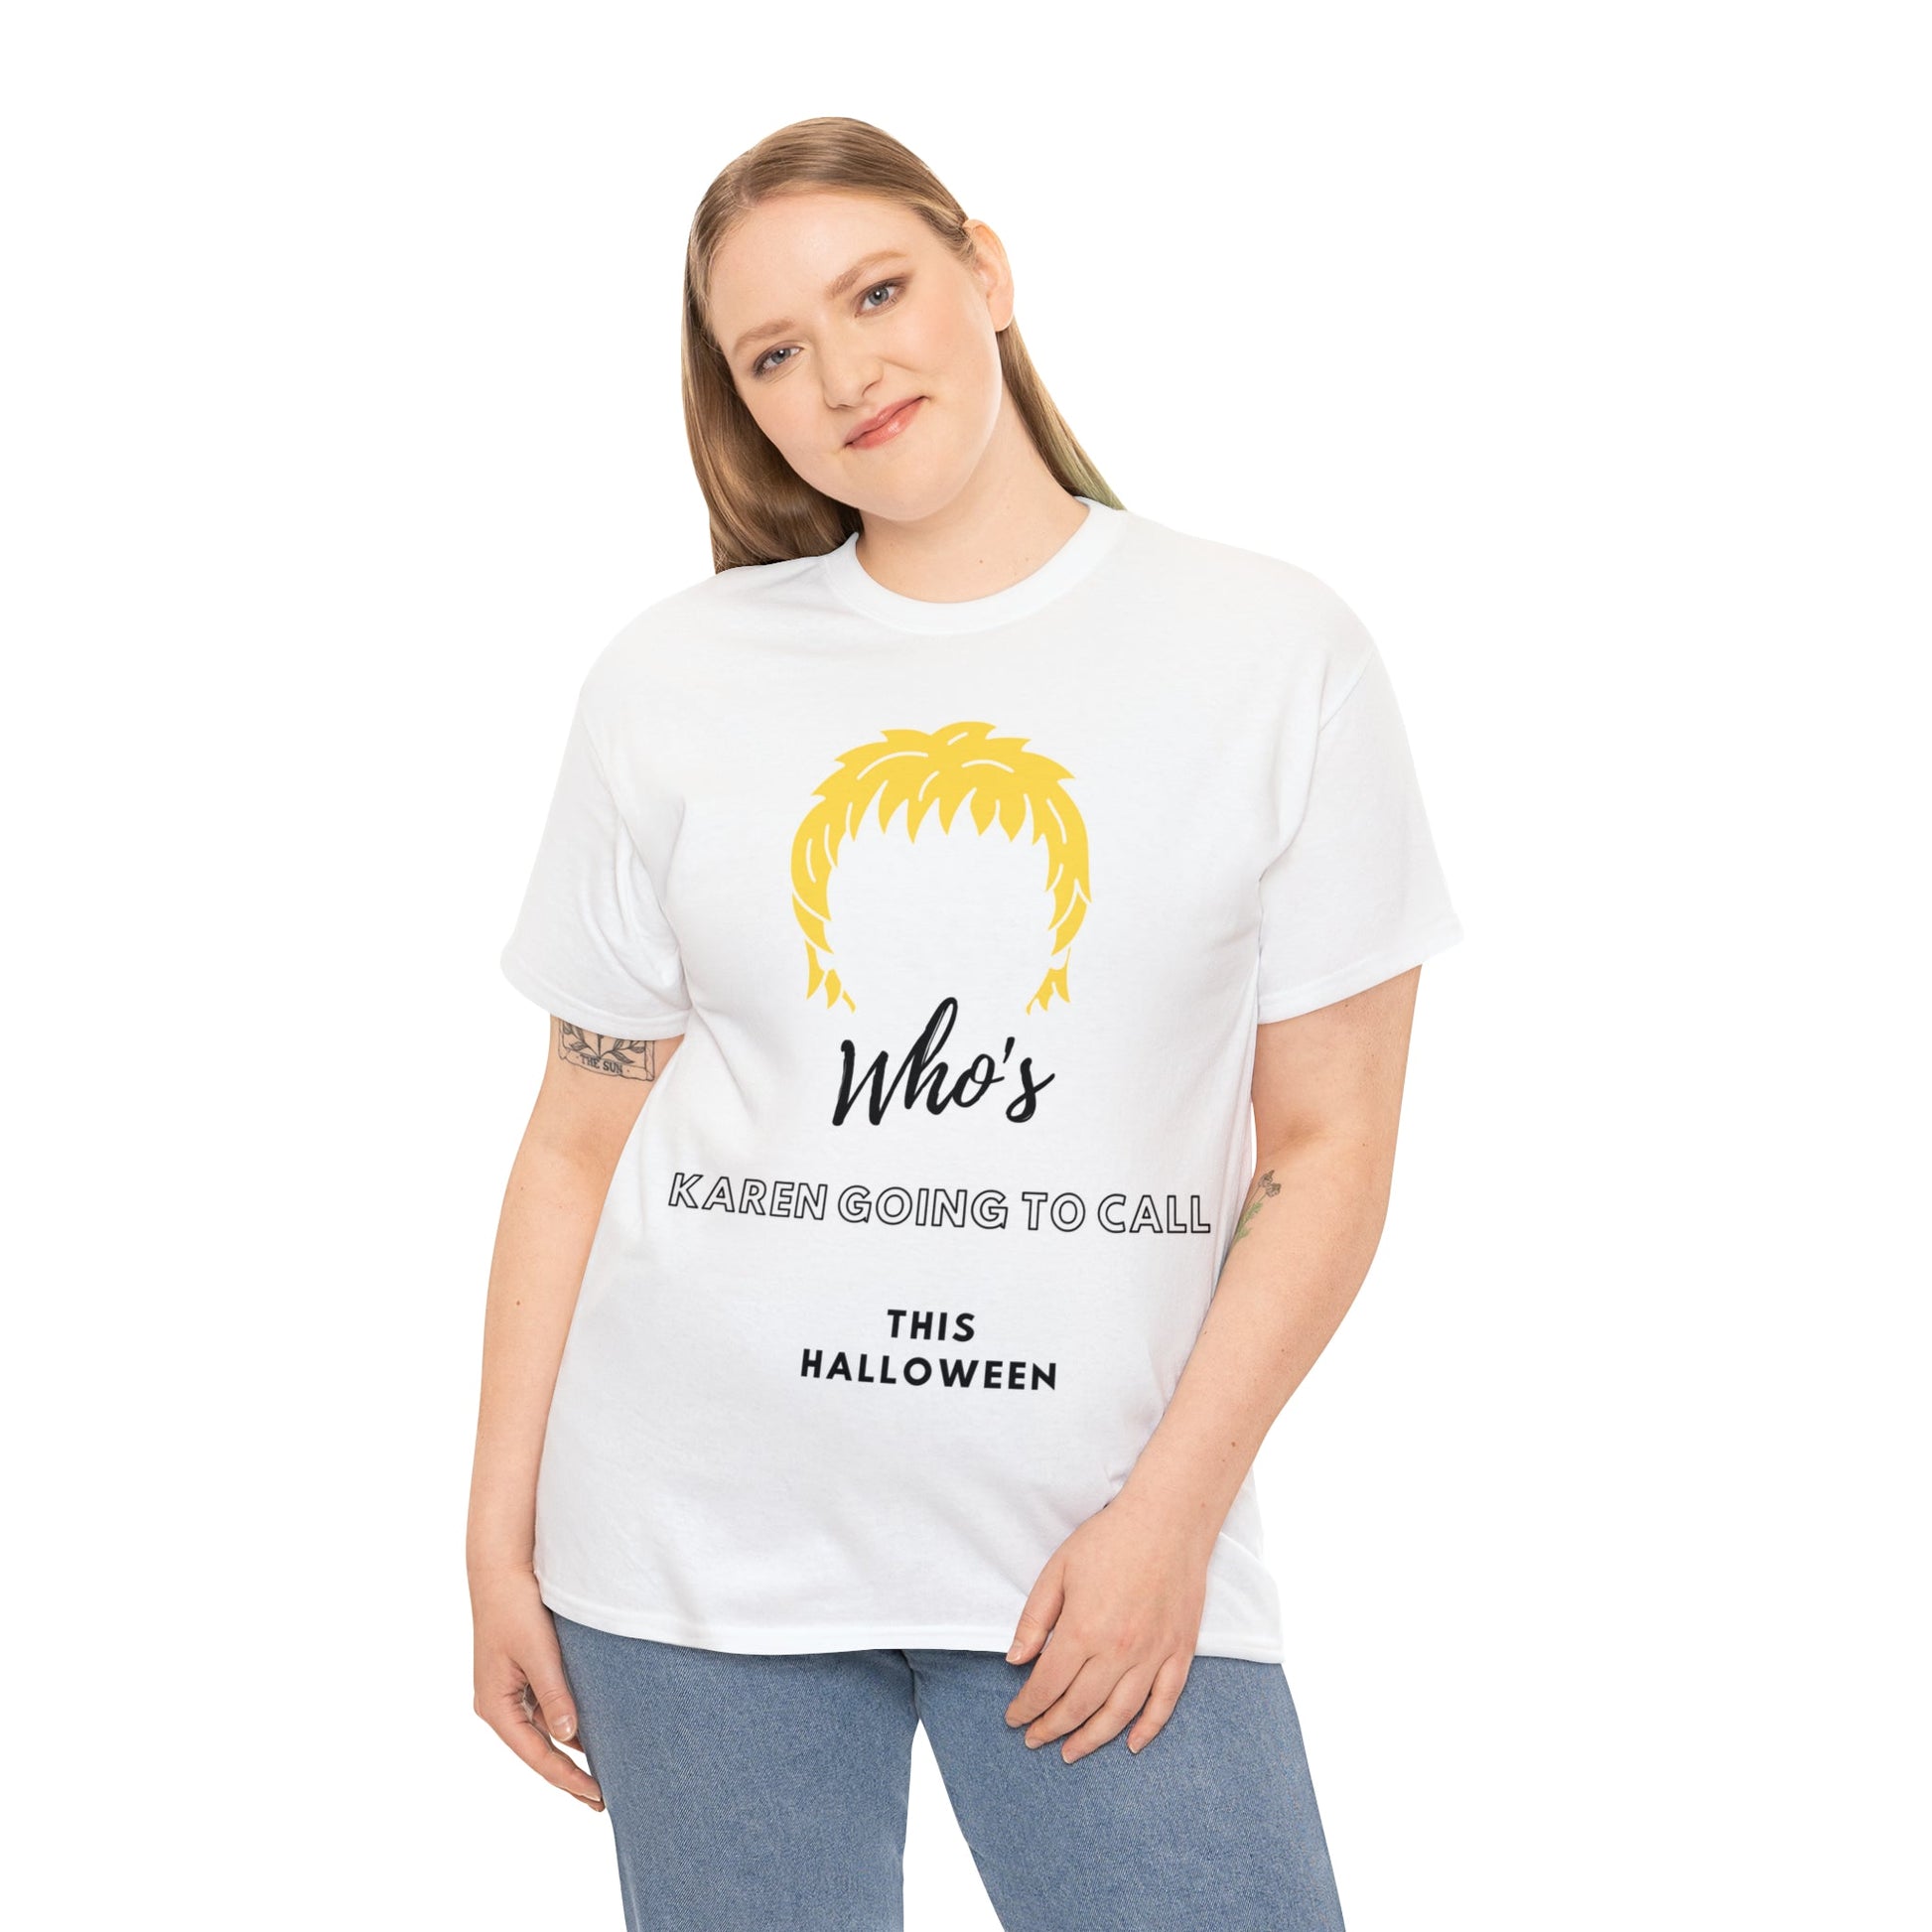 T-Shirt - Who's Karen Going To Call This Halloween